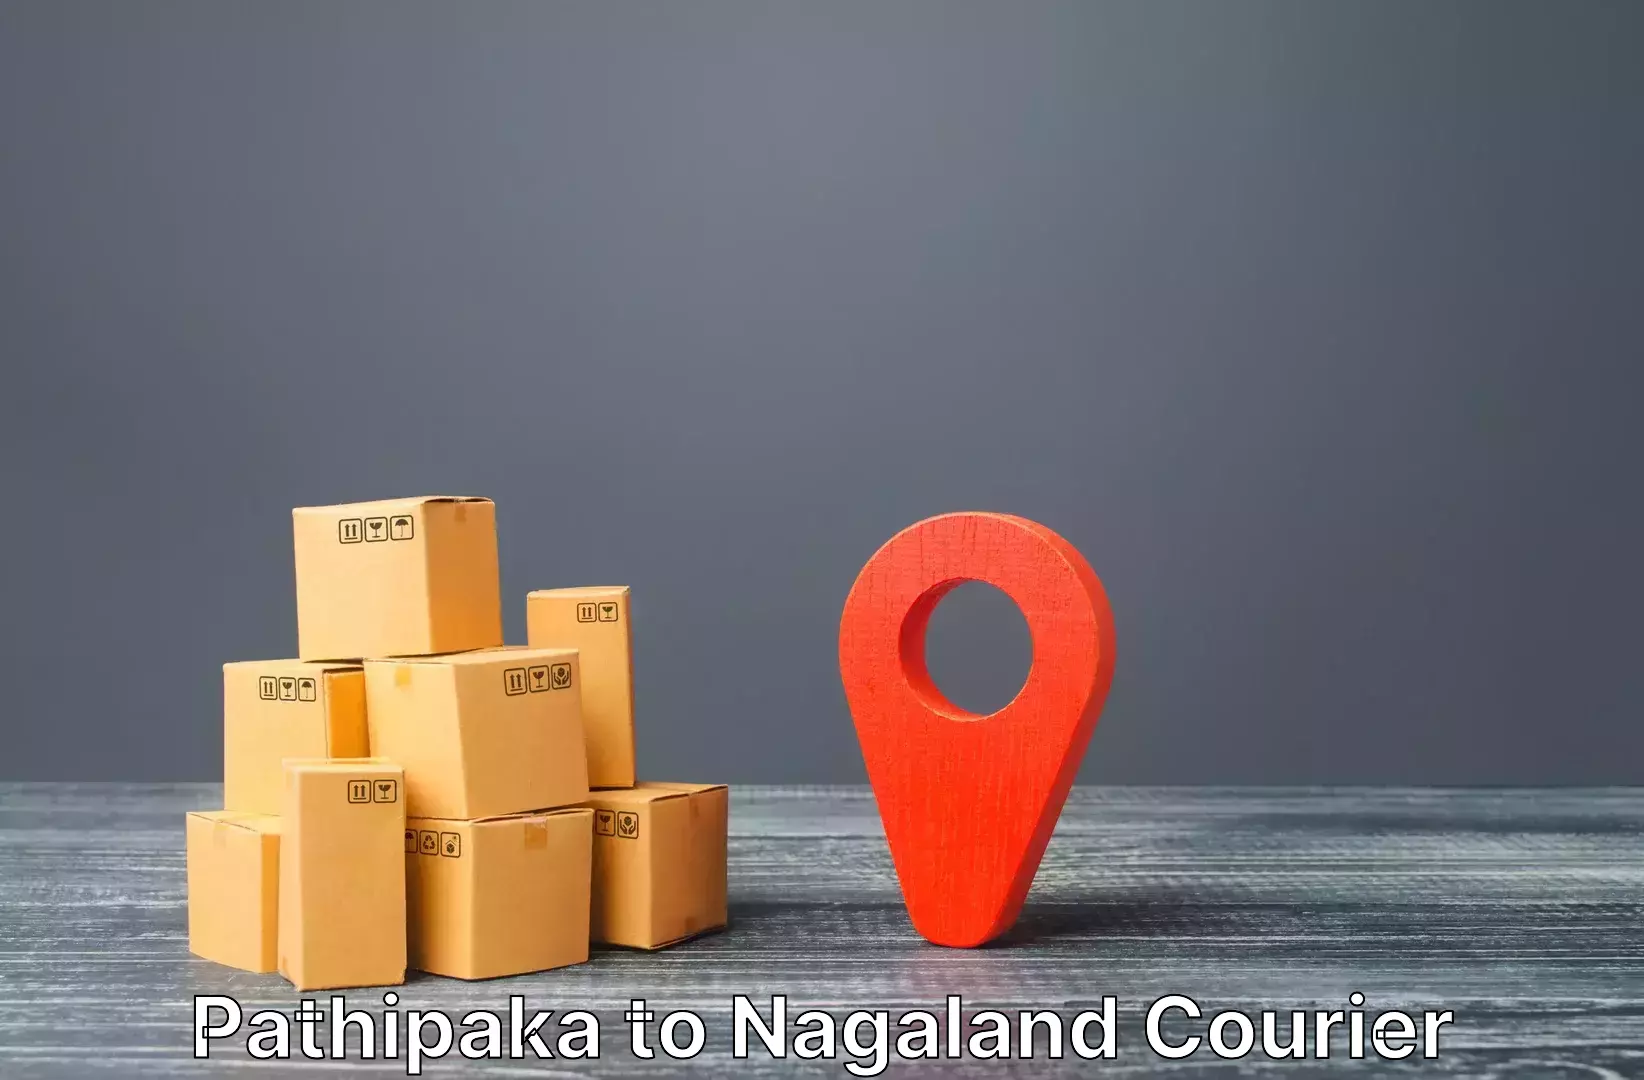 Door-to-door baggage service Pathipaka to Nagaland